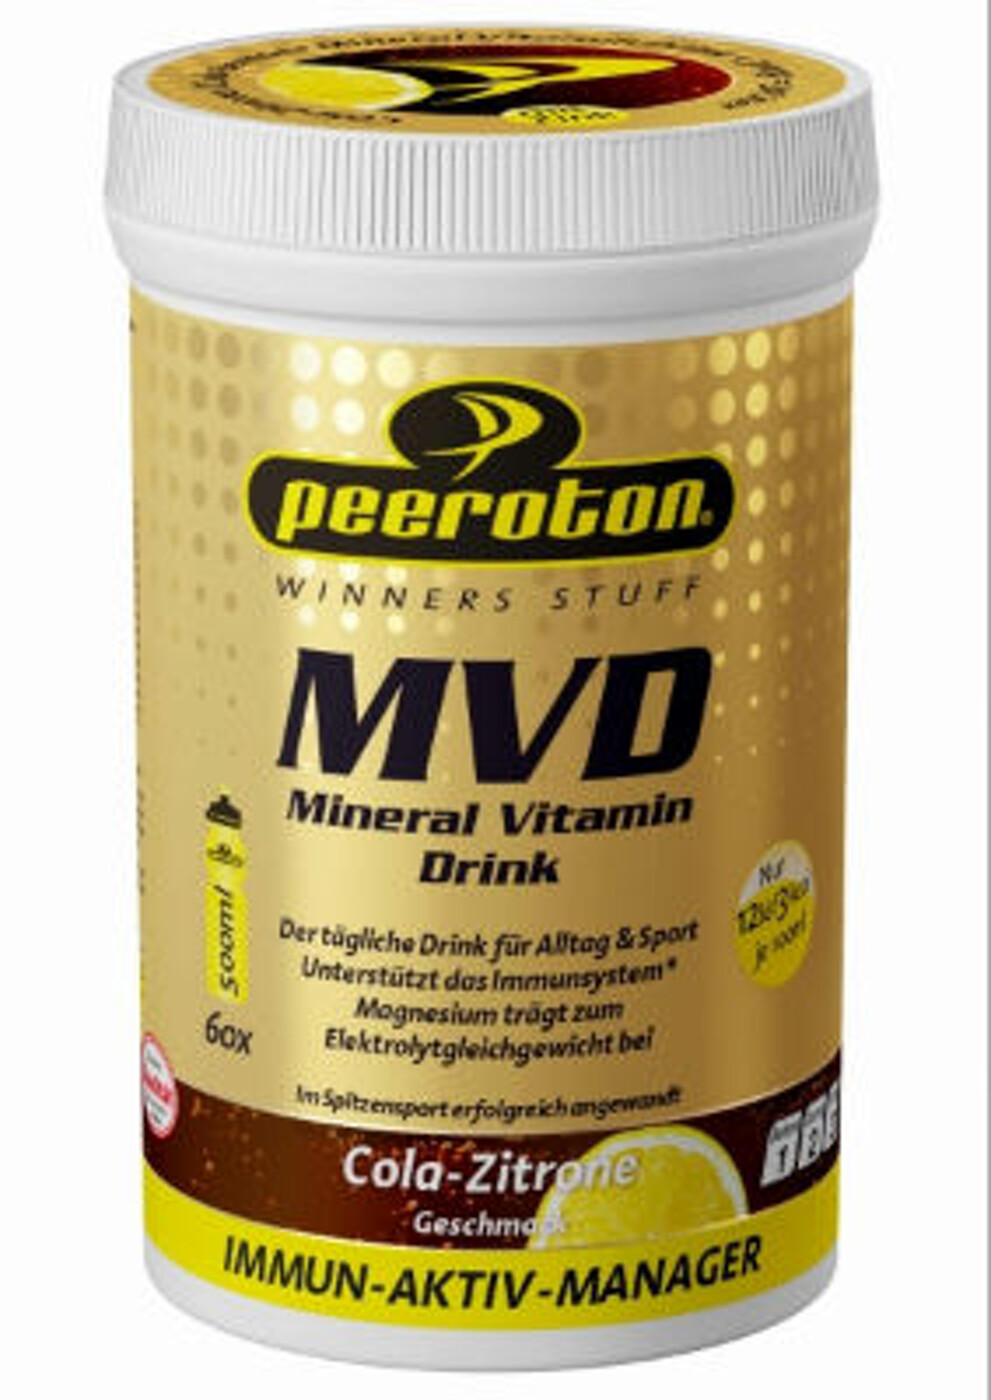 MIneral Vitamin Cola-Zitrone Drink 300g PEEROTON